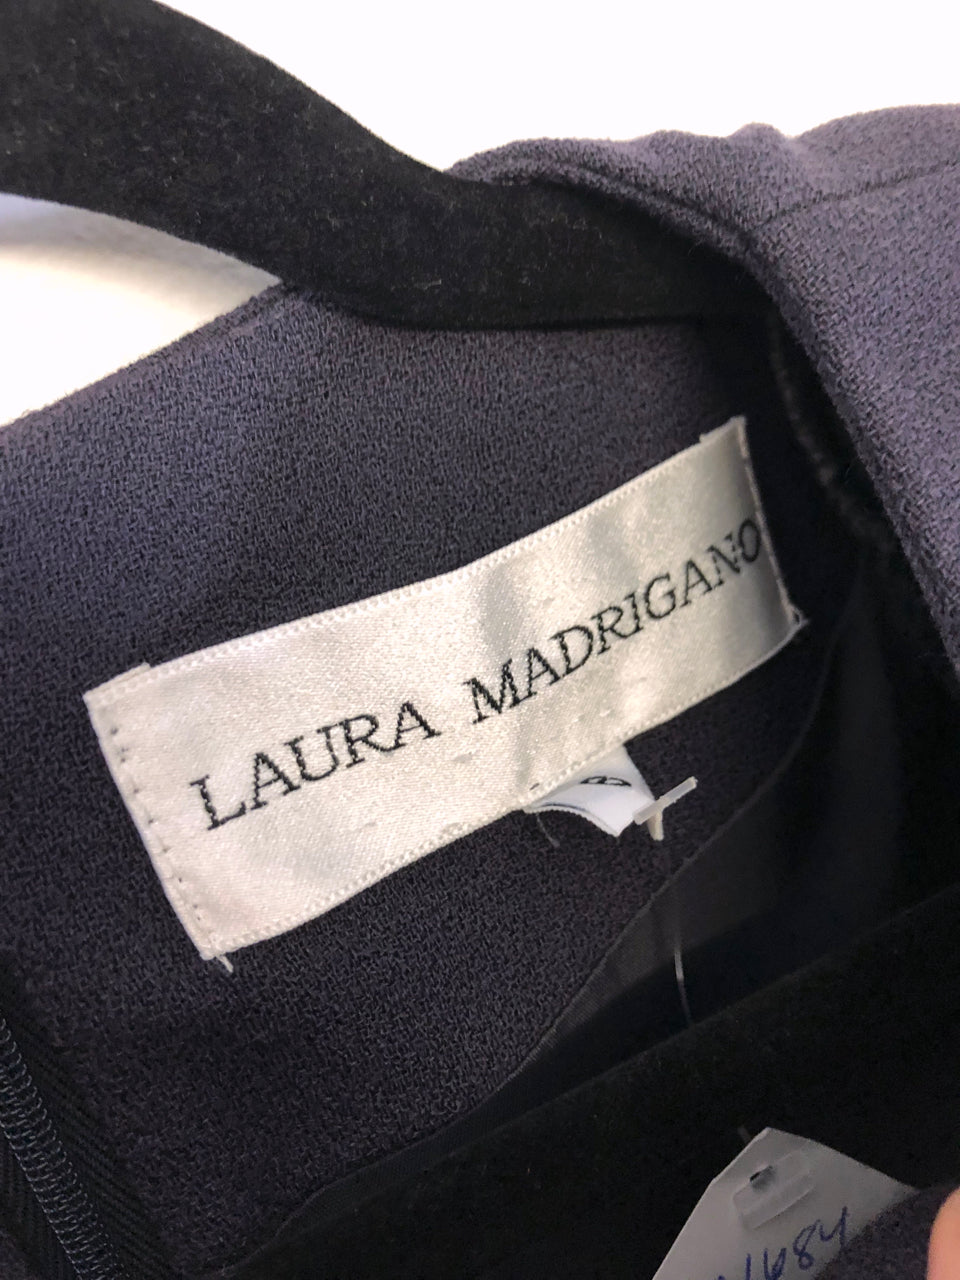 Laura Madrigano Dress